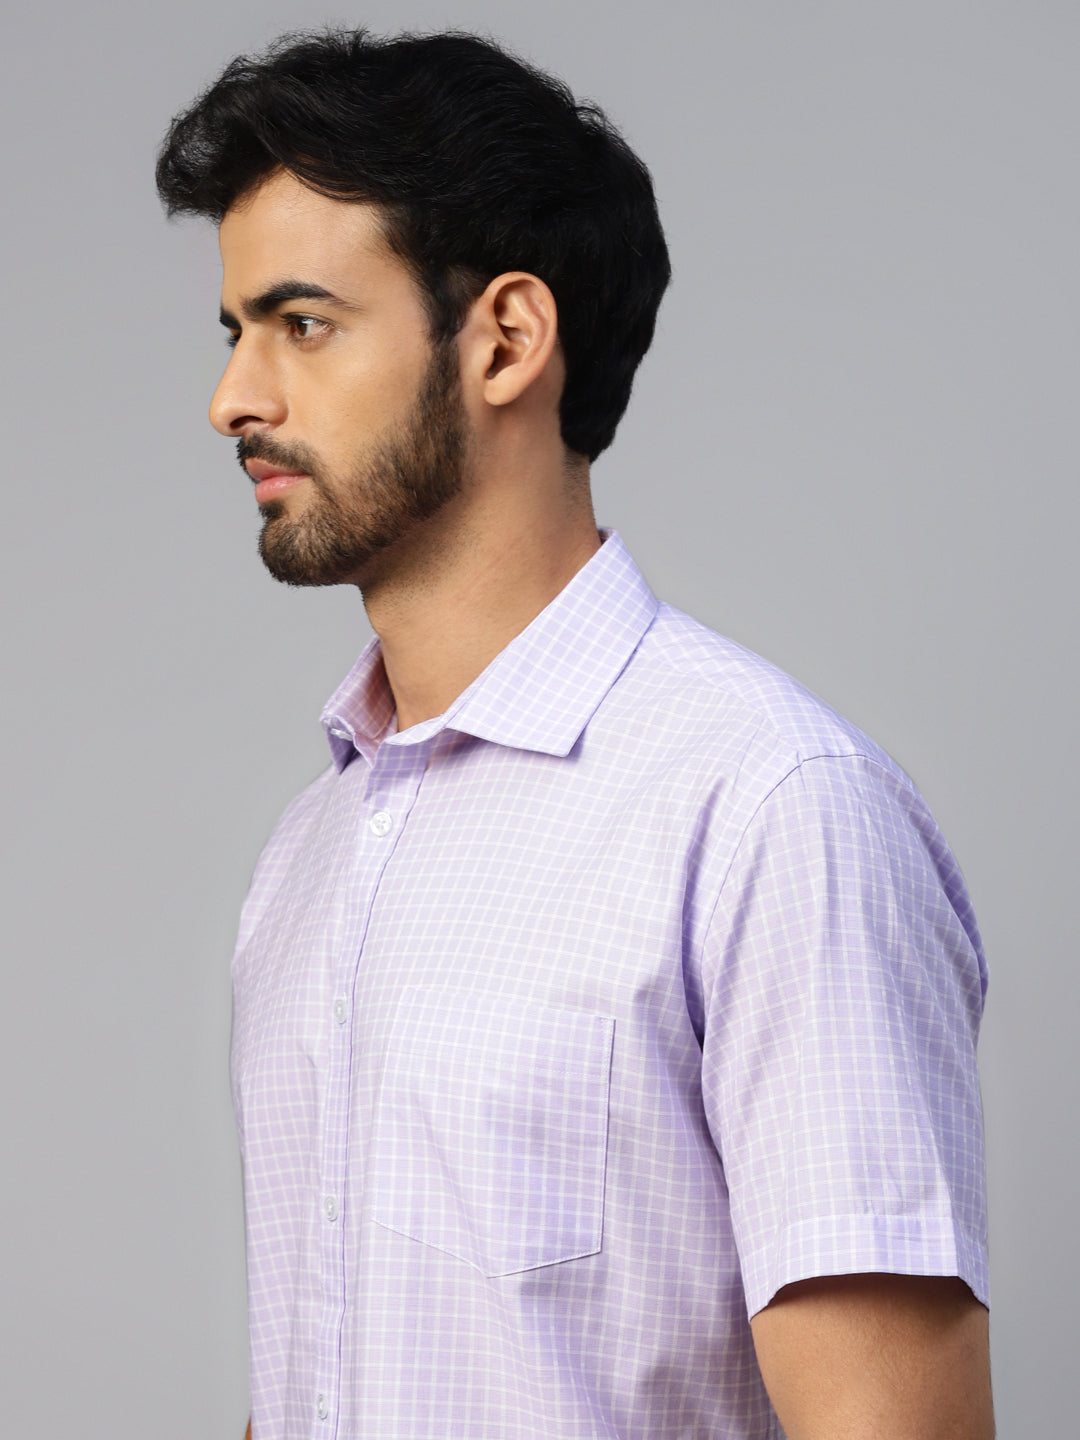 Don Vino Men's Lavender Shirt with Small Checks